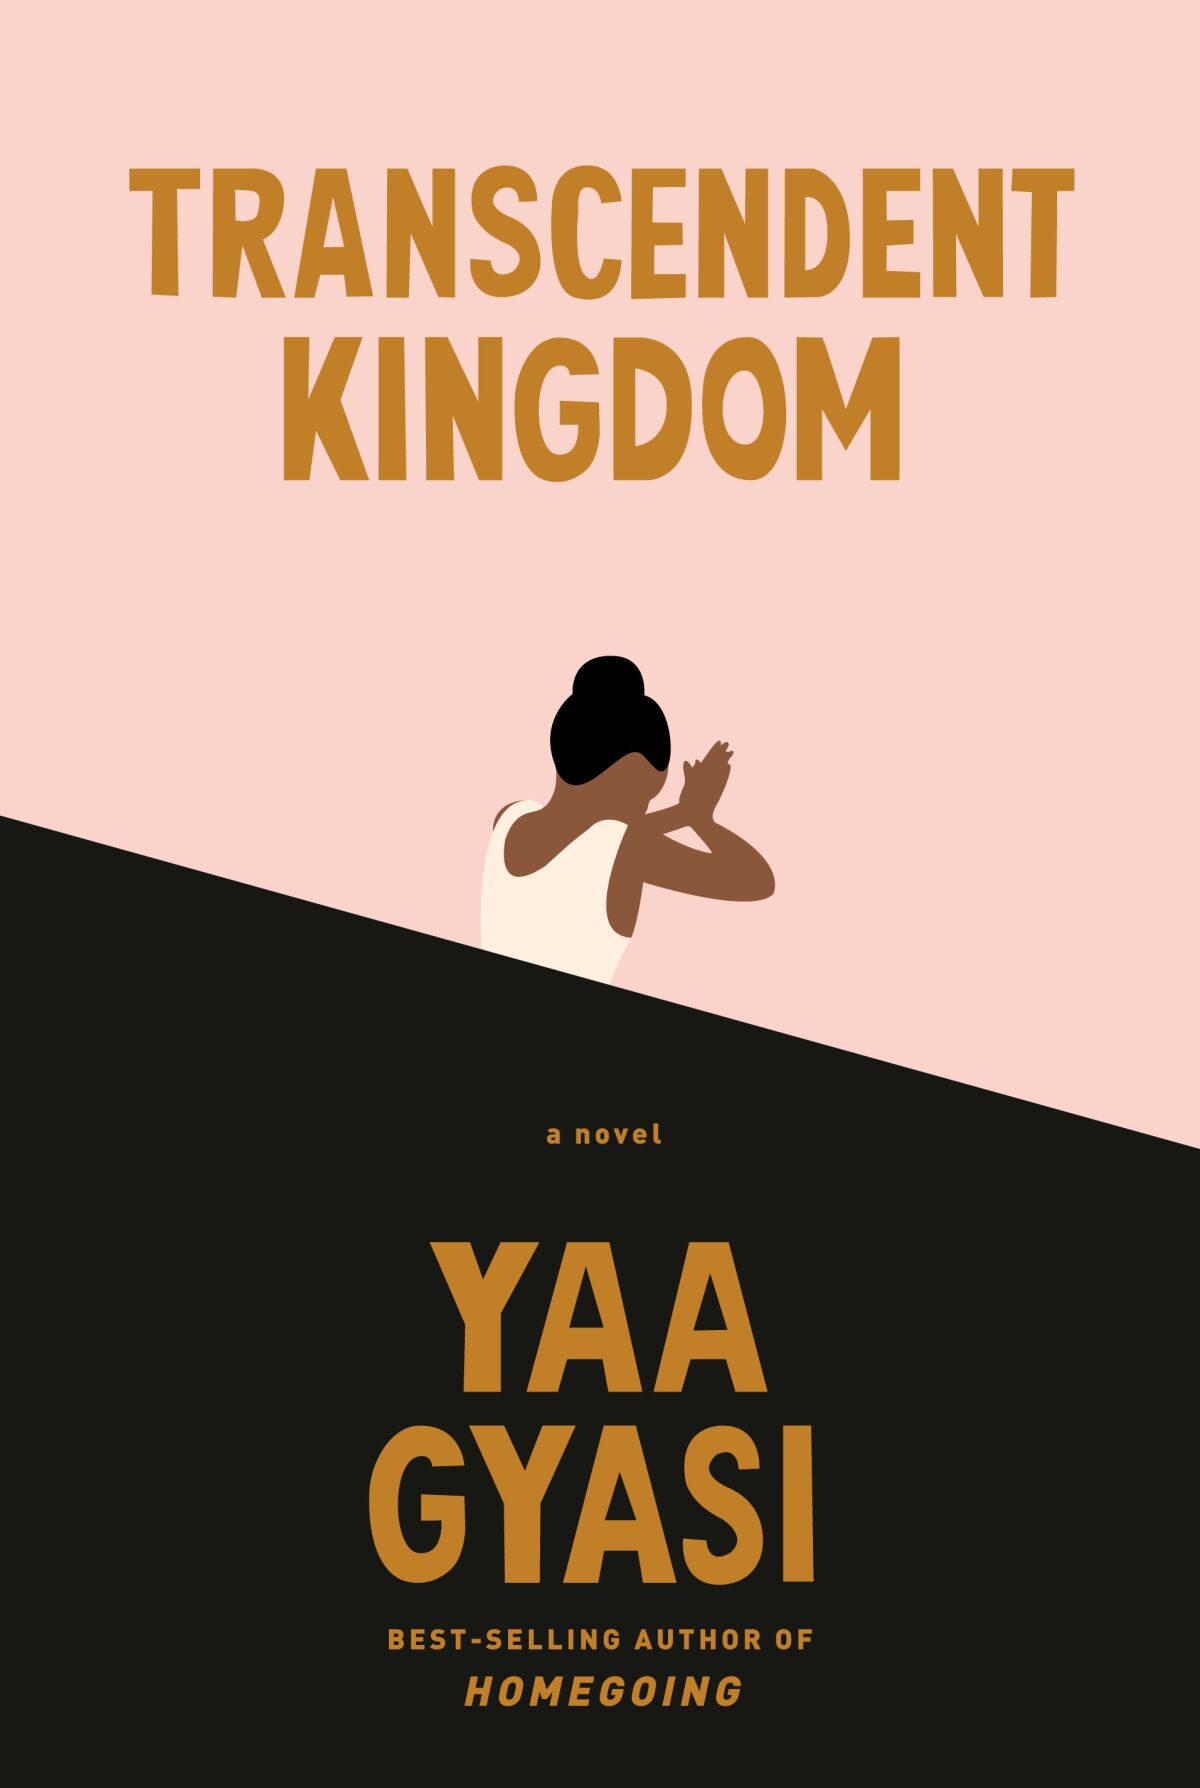 "Transcendent Kingdom," by Yaa Gyasi.